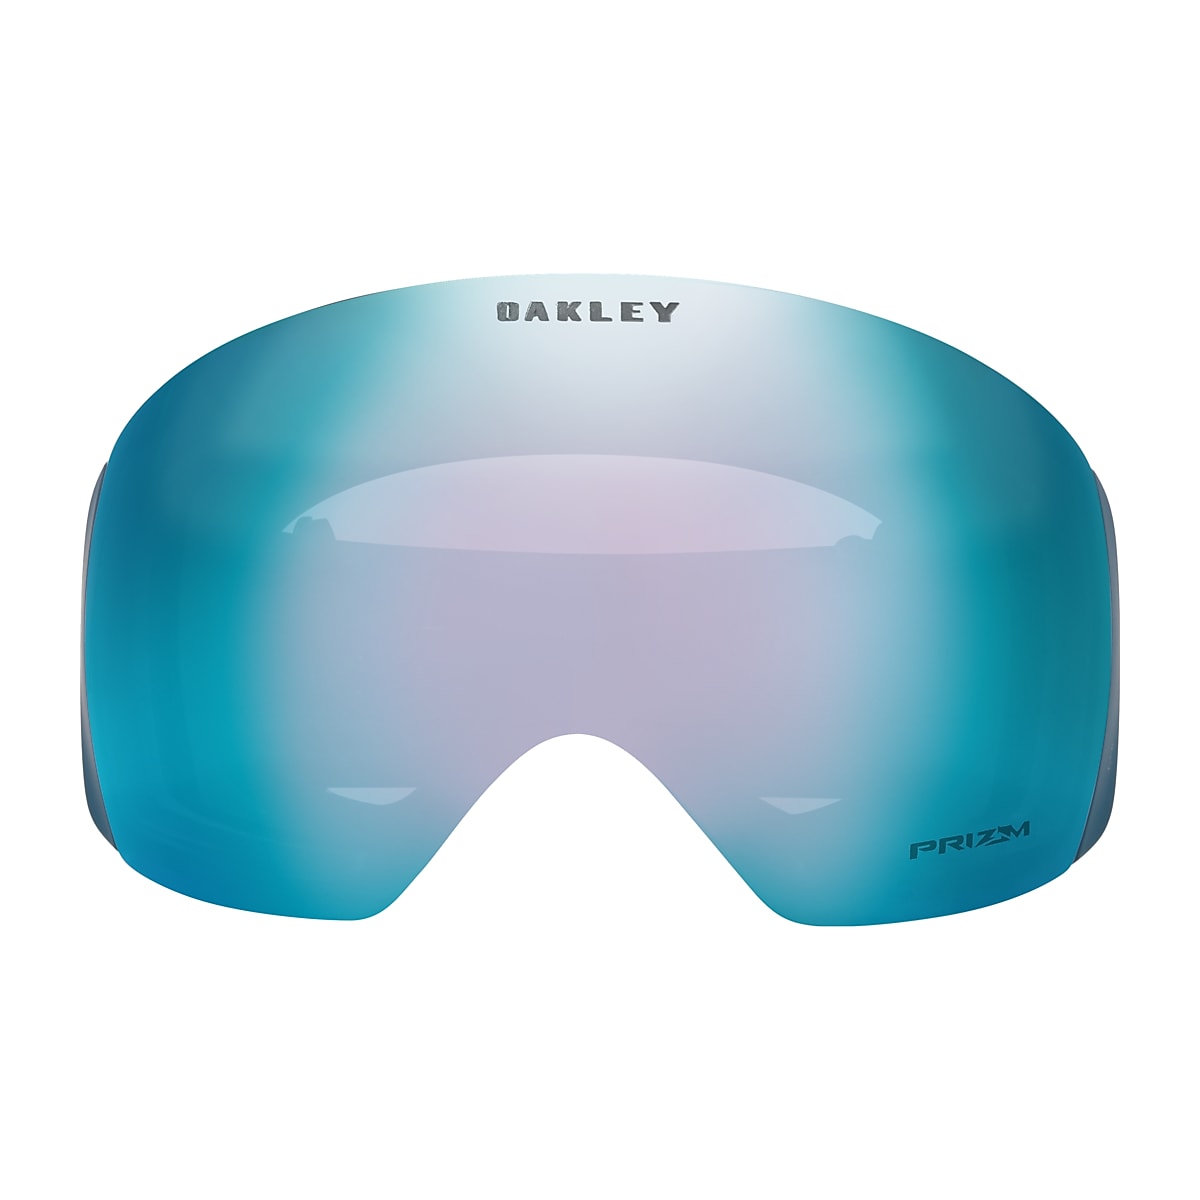 Oakley Flight Deck™ L Snow Goggles - Poseidon - Prizm Snow Sapphire Iridium  - OO7050-A2 | Oakley GB Store